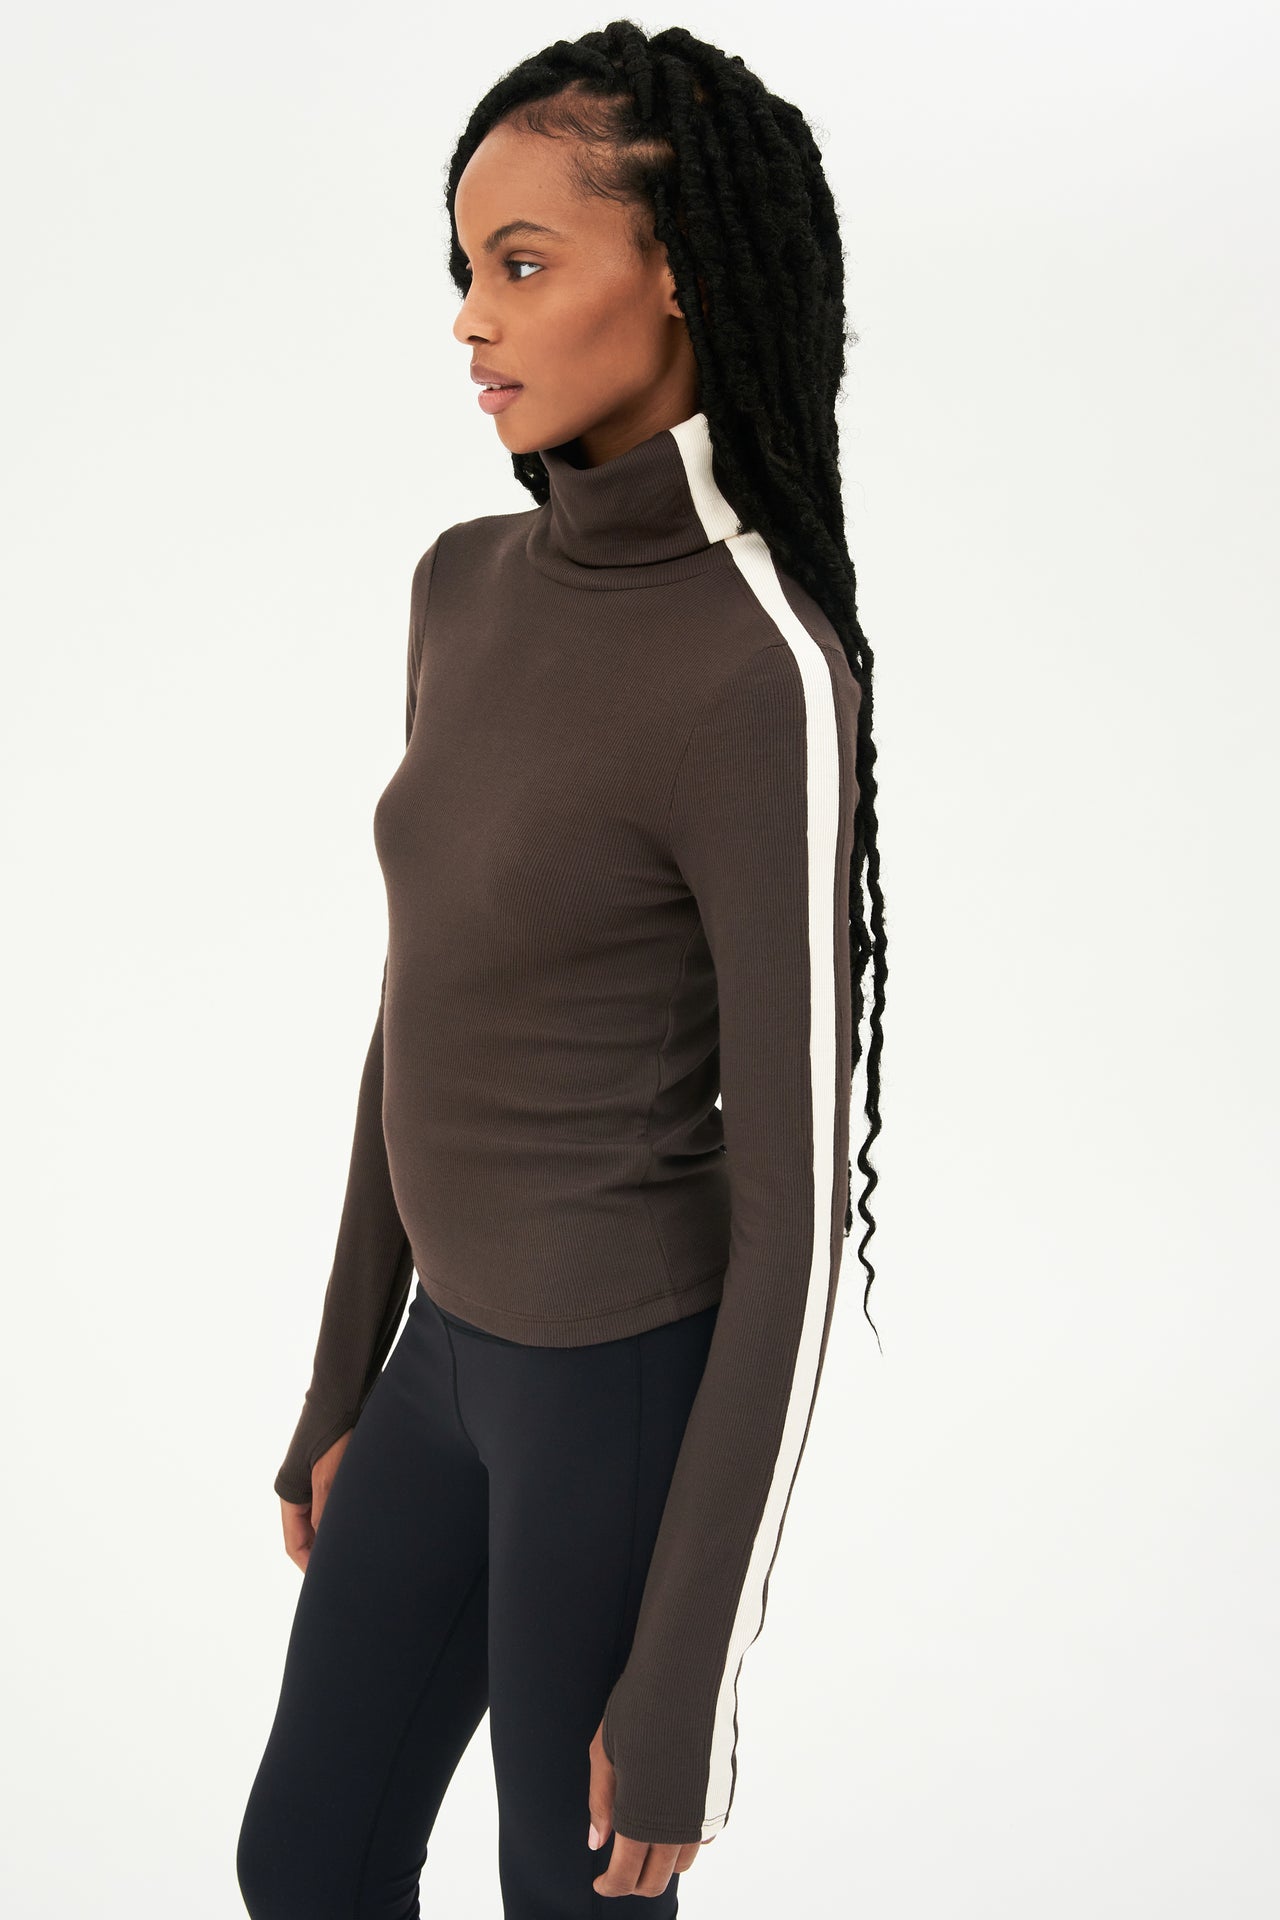 A woman wearing a SPLITS59 Jackson Rib Turtleneck in Dark Chocolate/Creme and black leggings.